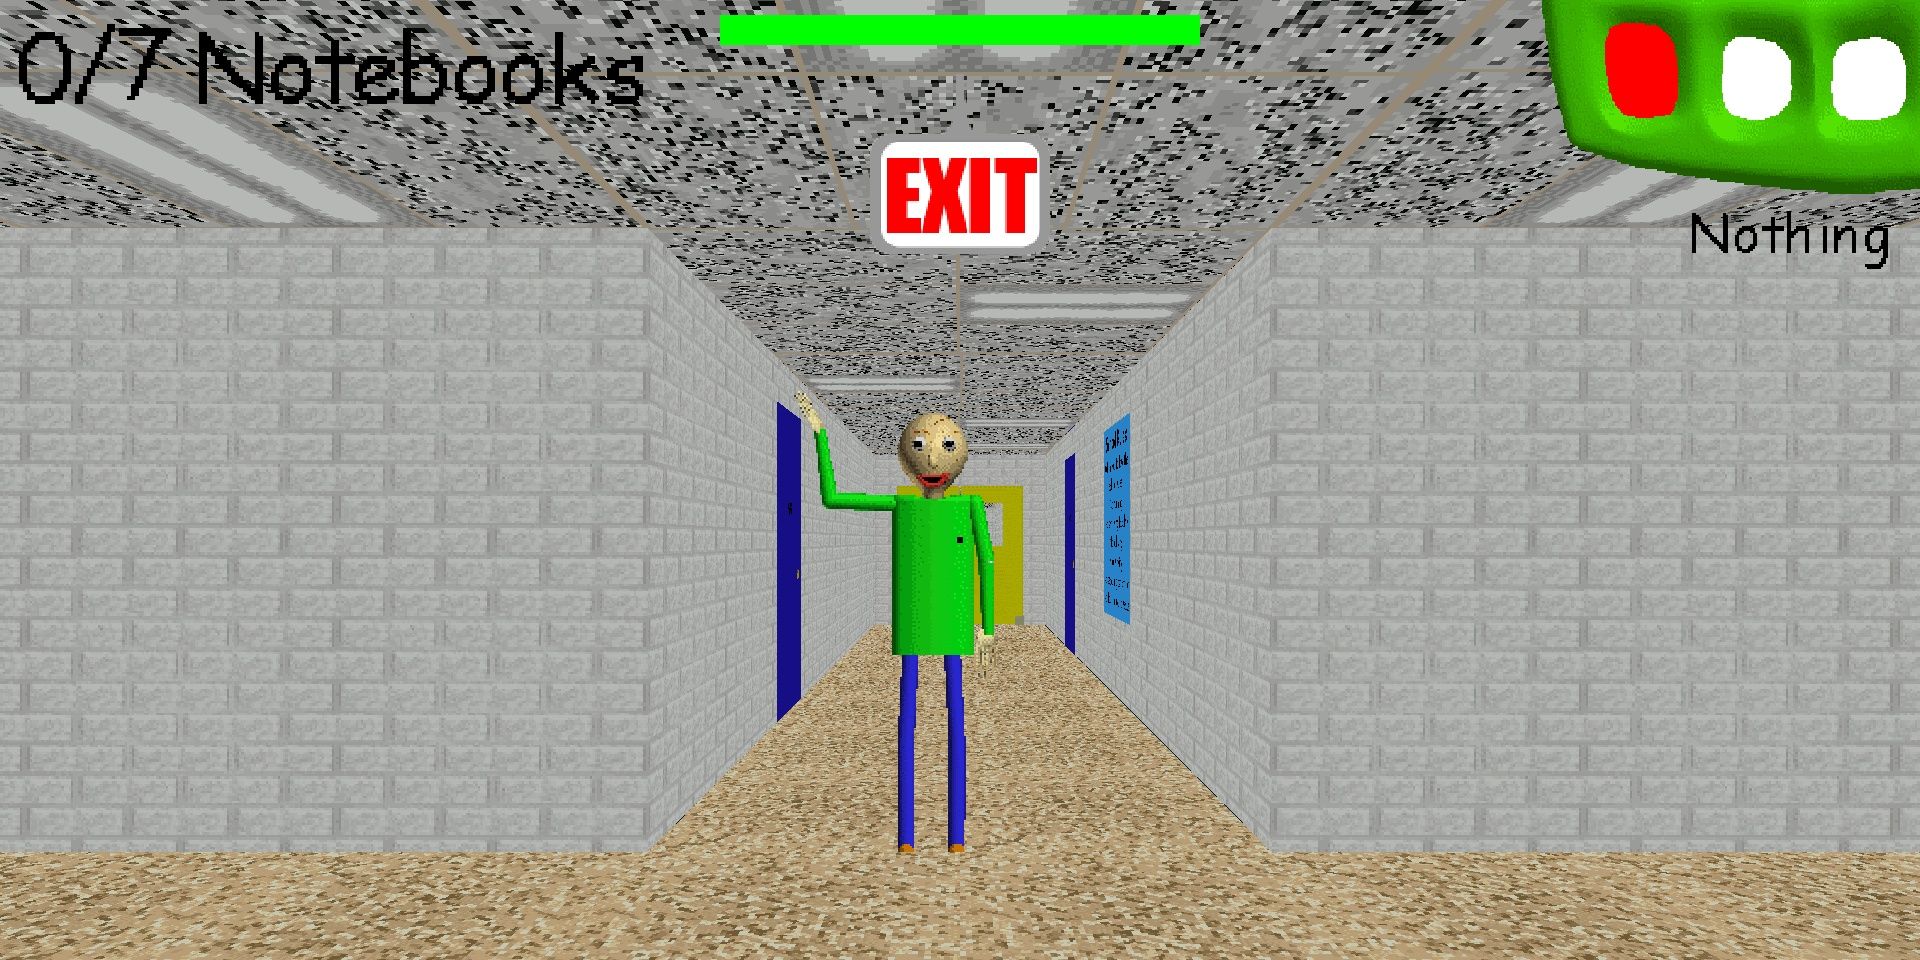 A screenshot of Baldi's Basics where Baldi is waving at the player in a hallway